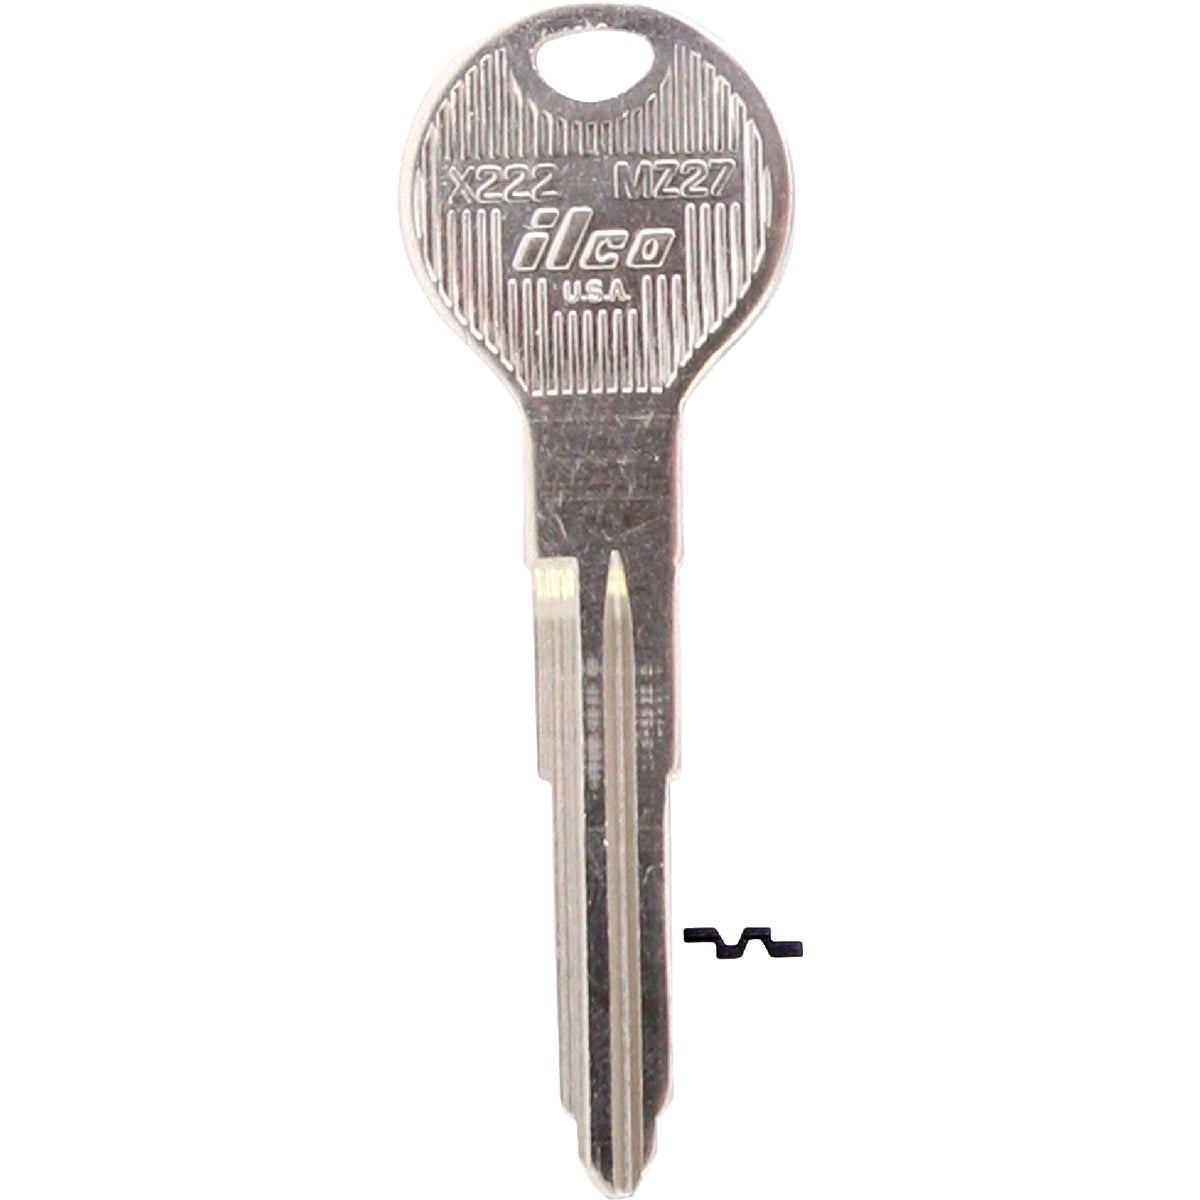 ILCO Mazda Nickel Plated Automotive Key, MZ27 / X222 (10-Pack)